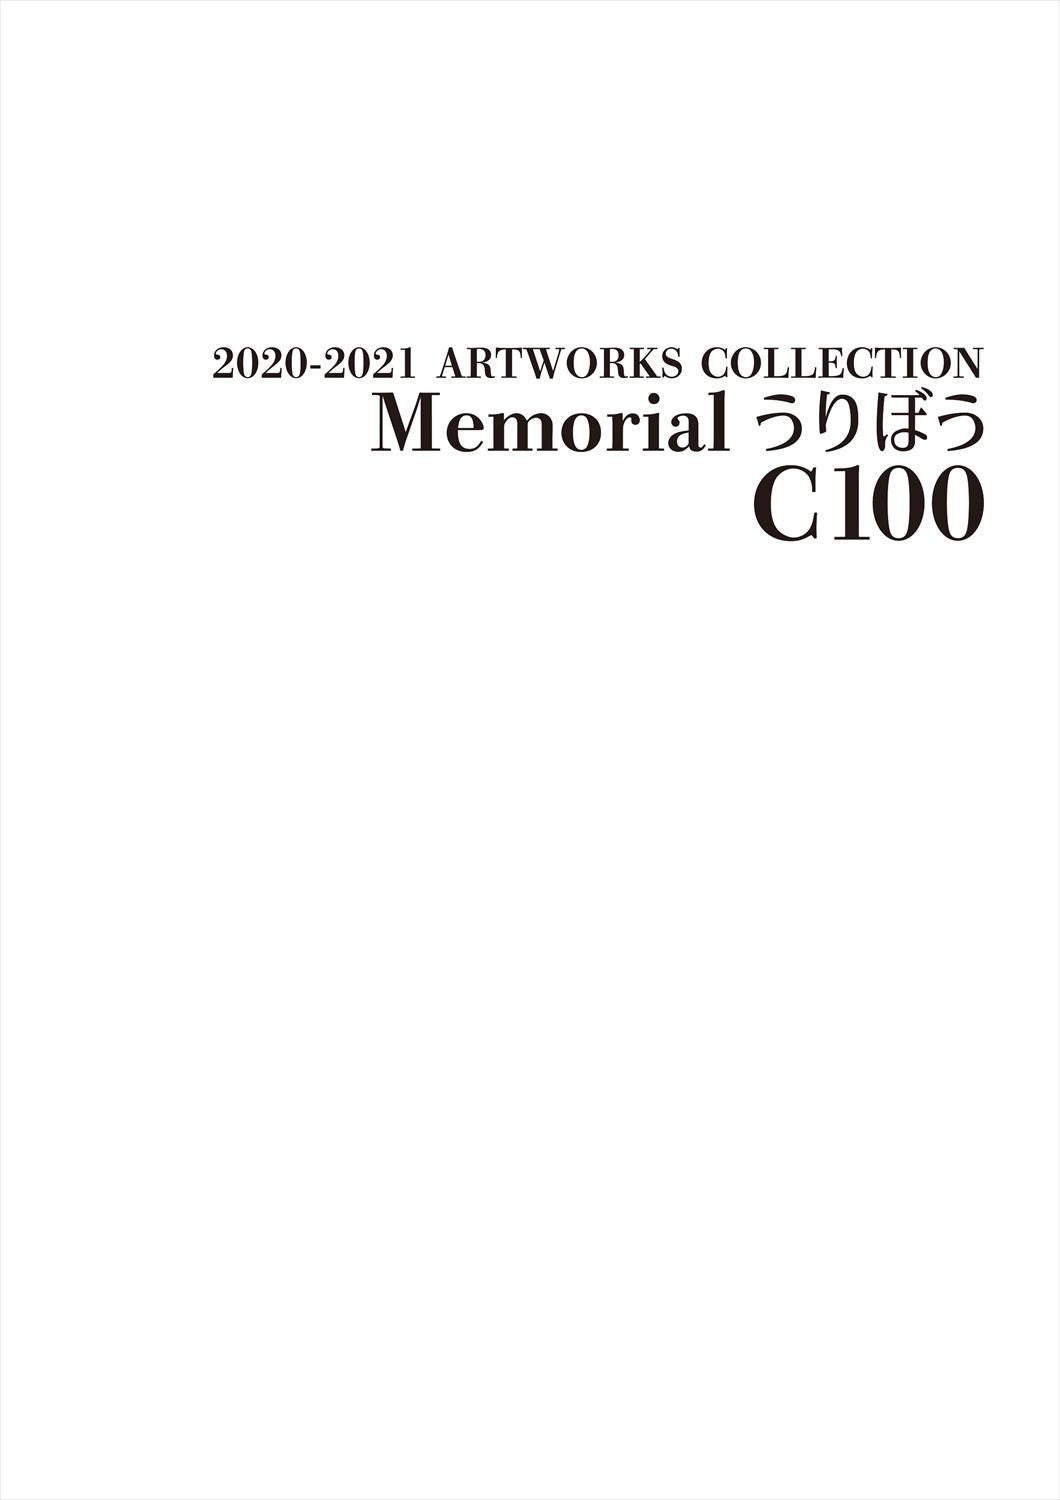 Branquinha 「C100 Memorial うりぼう 2020-2021ARTWORKS COLLECTION」 Newbie - Picture 2